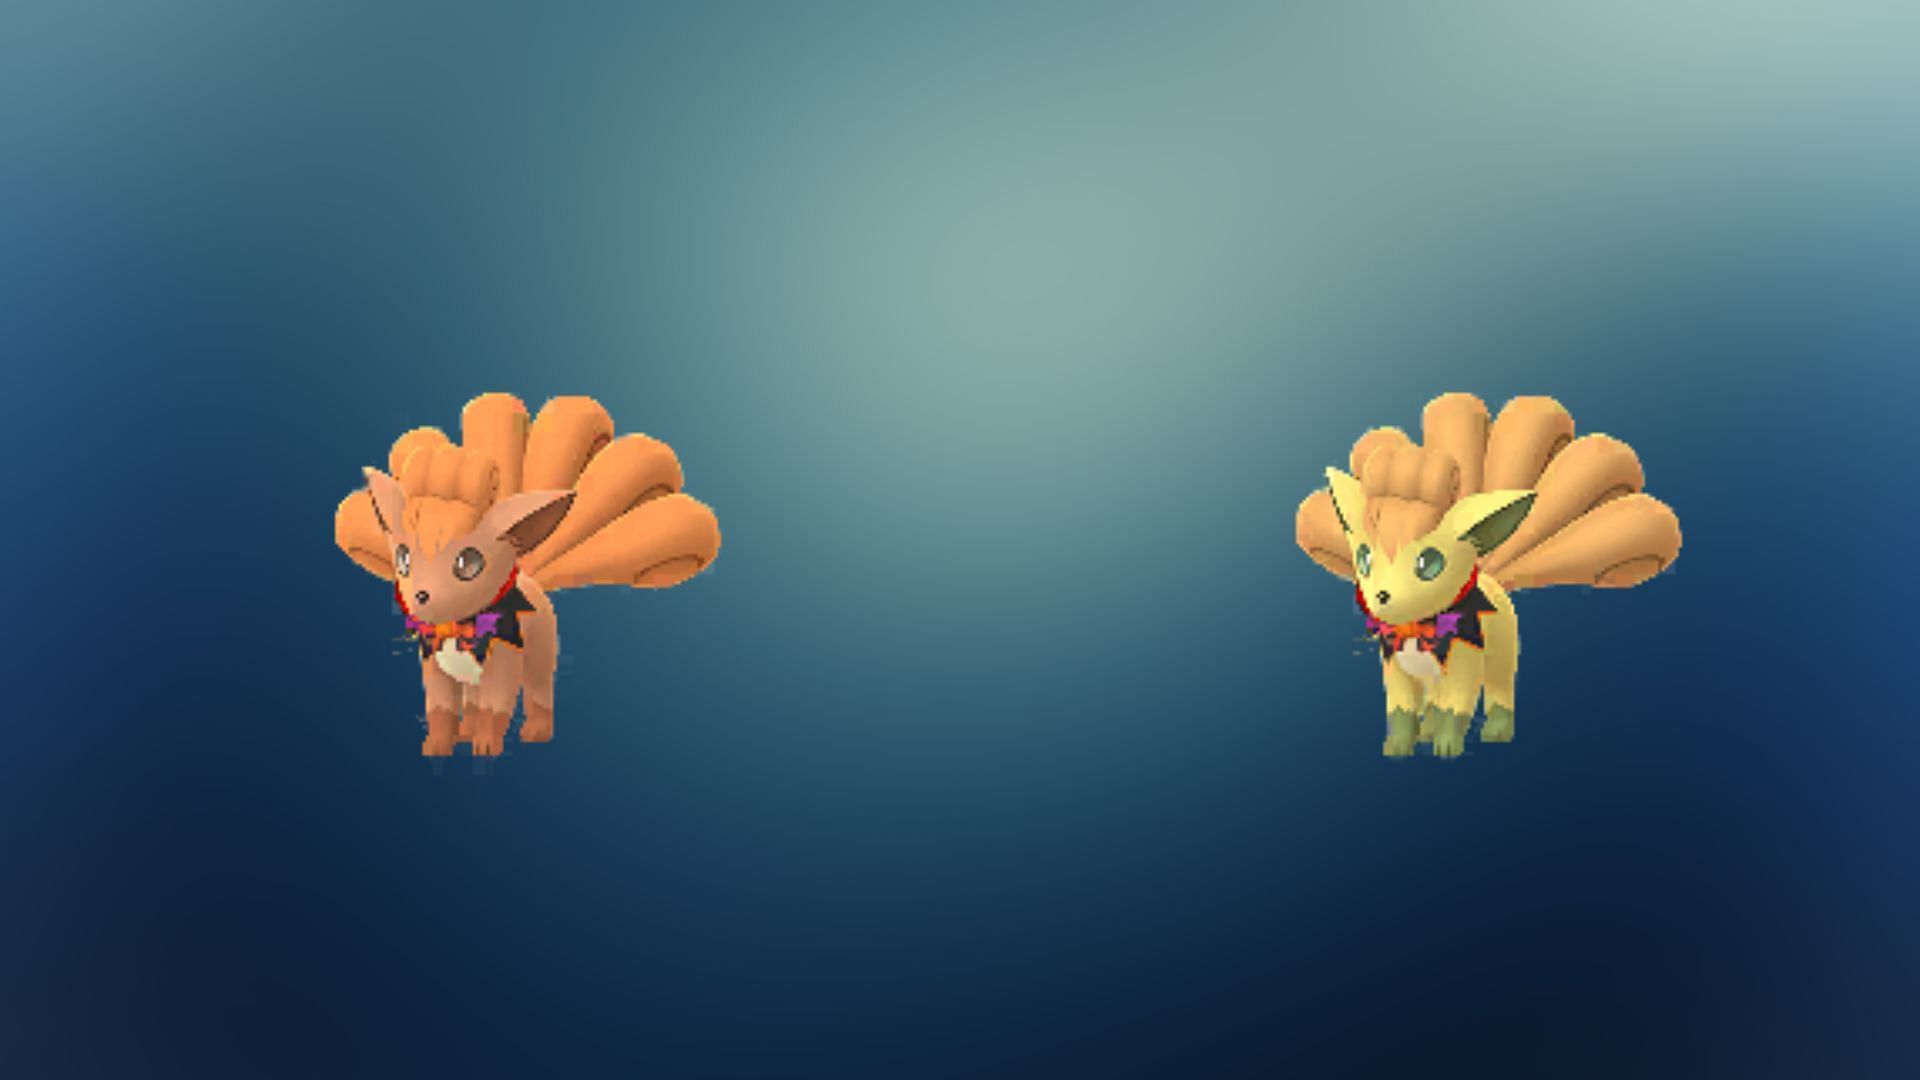 Pokemon GO shiny Pikachu and shiny Gengar wearing Tricks & Treats costume  guide